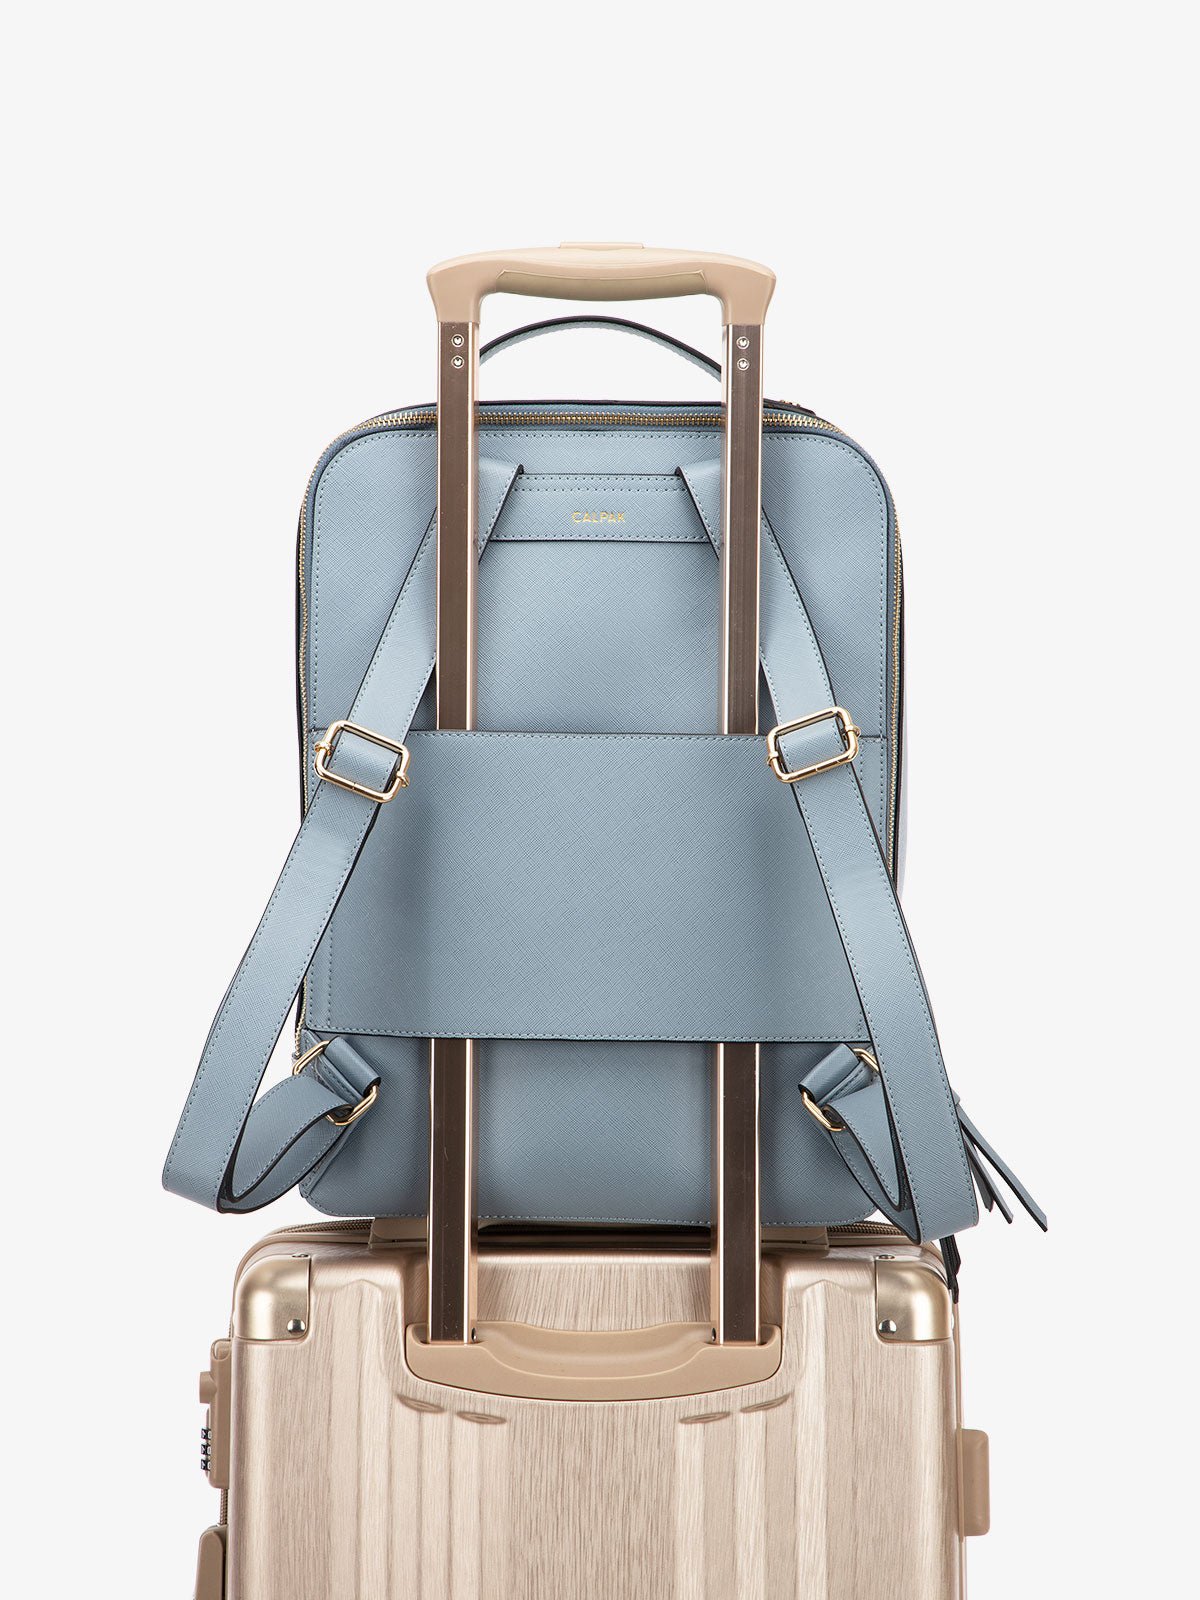 CALPAK Kaya laptop backpack with luggage trolley sleeve in blue bell color